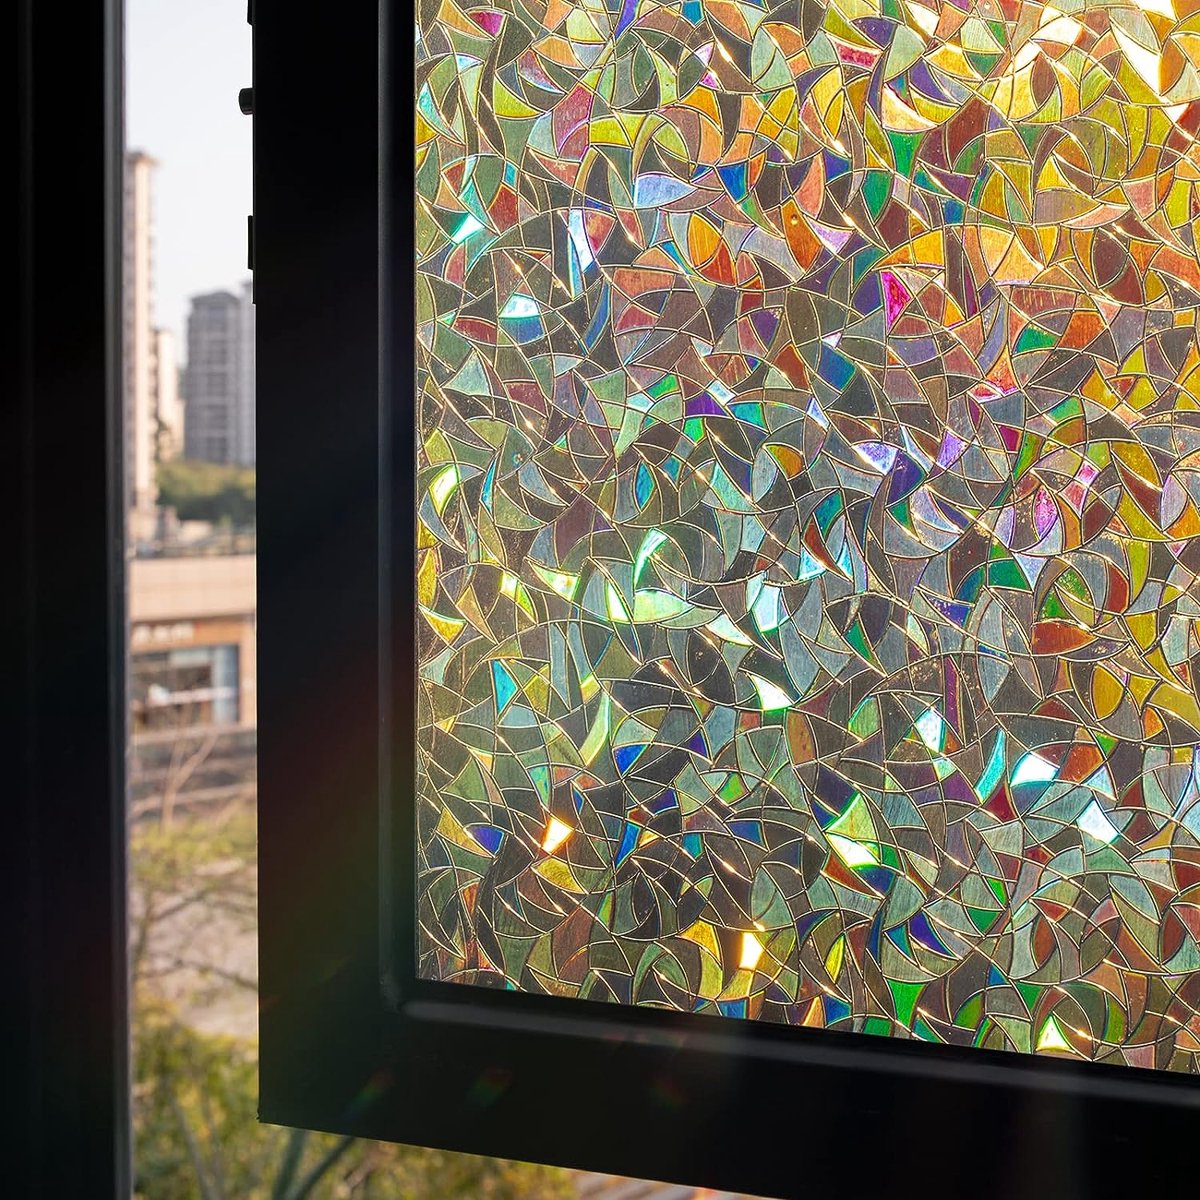 Raamfolie 44 5x300cm 3D zelfklevende raamfolie glas-in-lood zonwering anti UV folie raaminkijkbescherming glasfolie statisch klevend zonder lijm